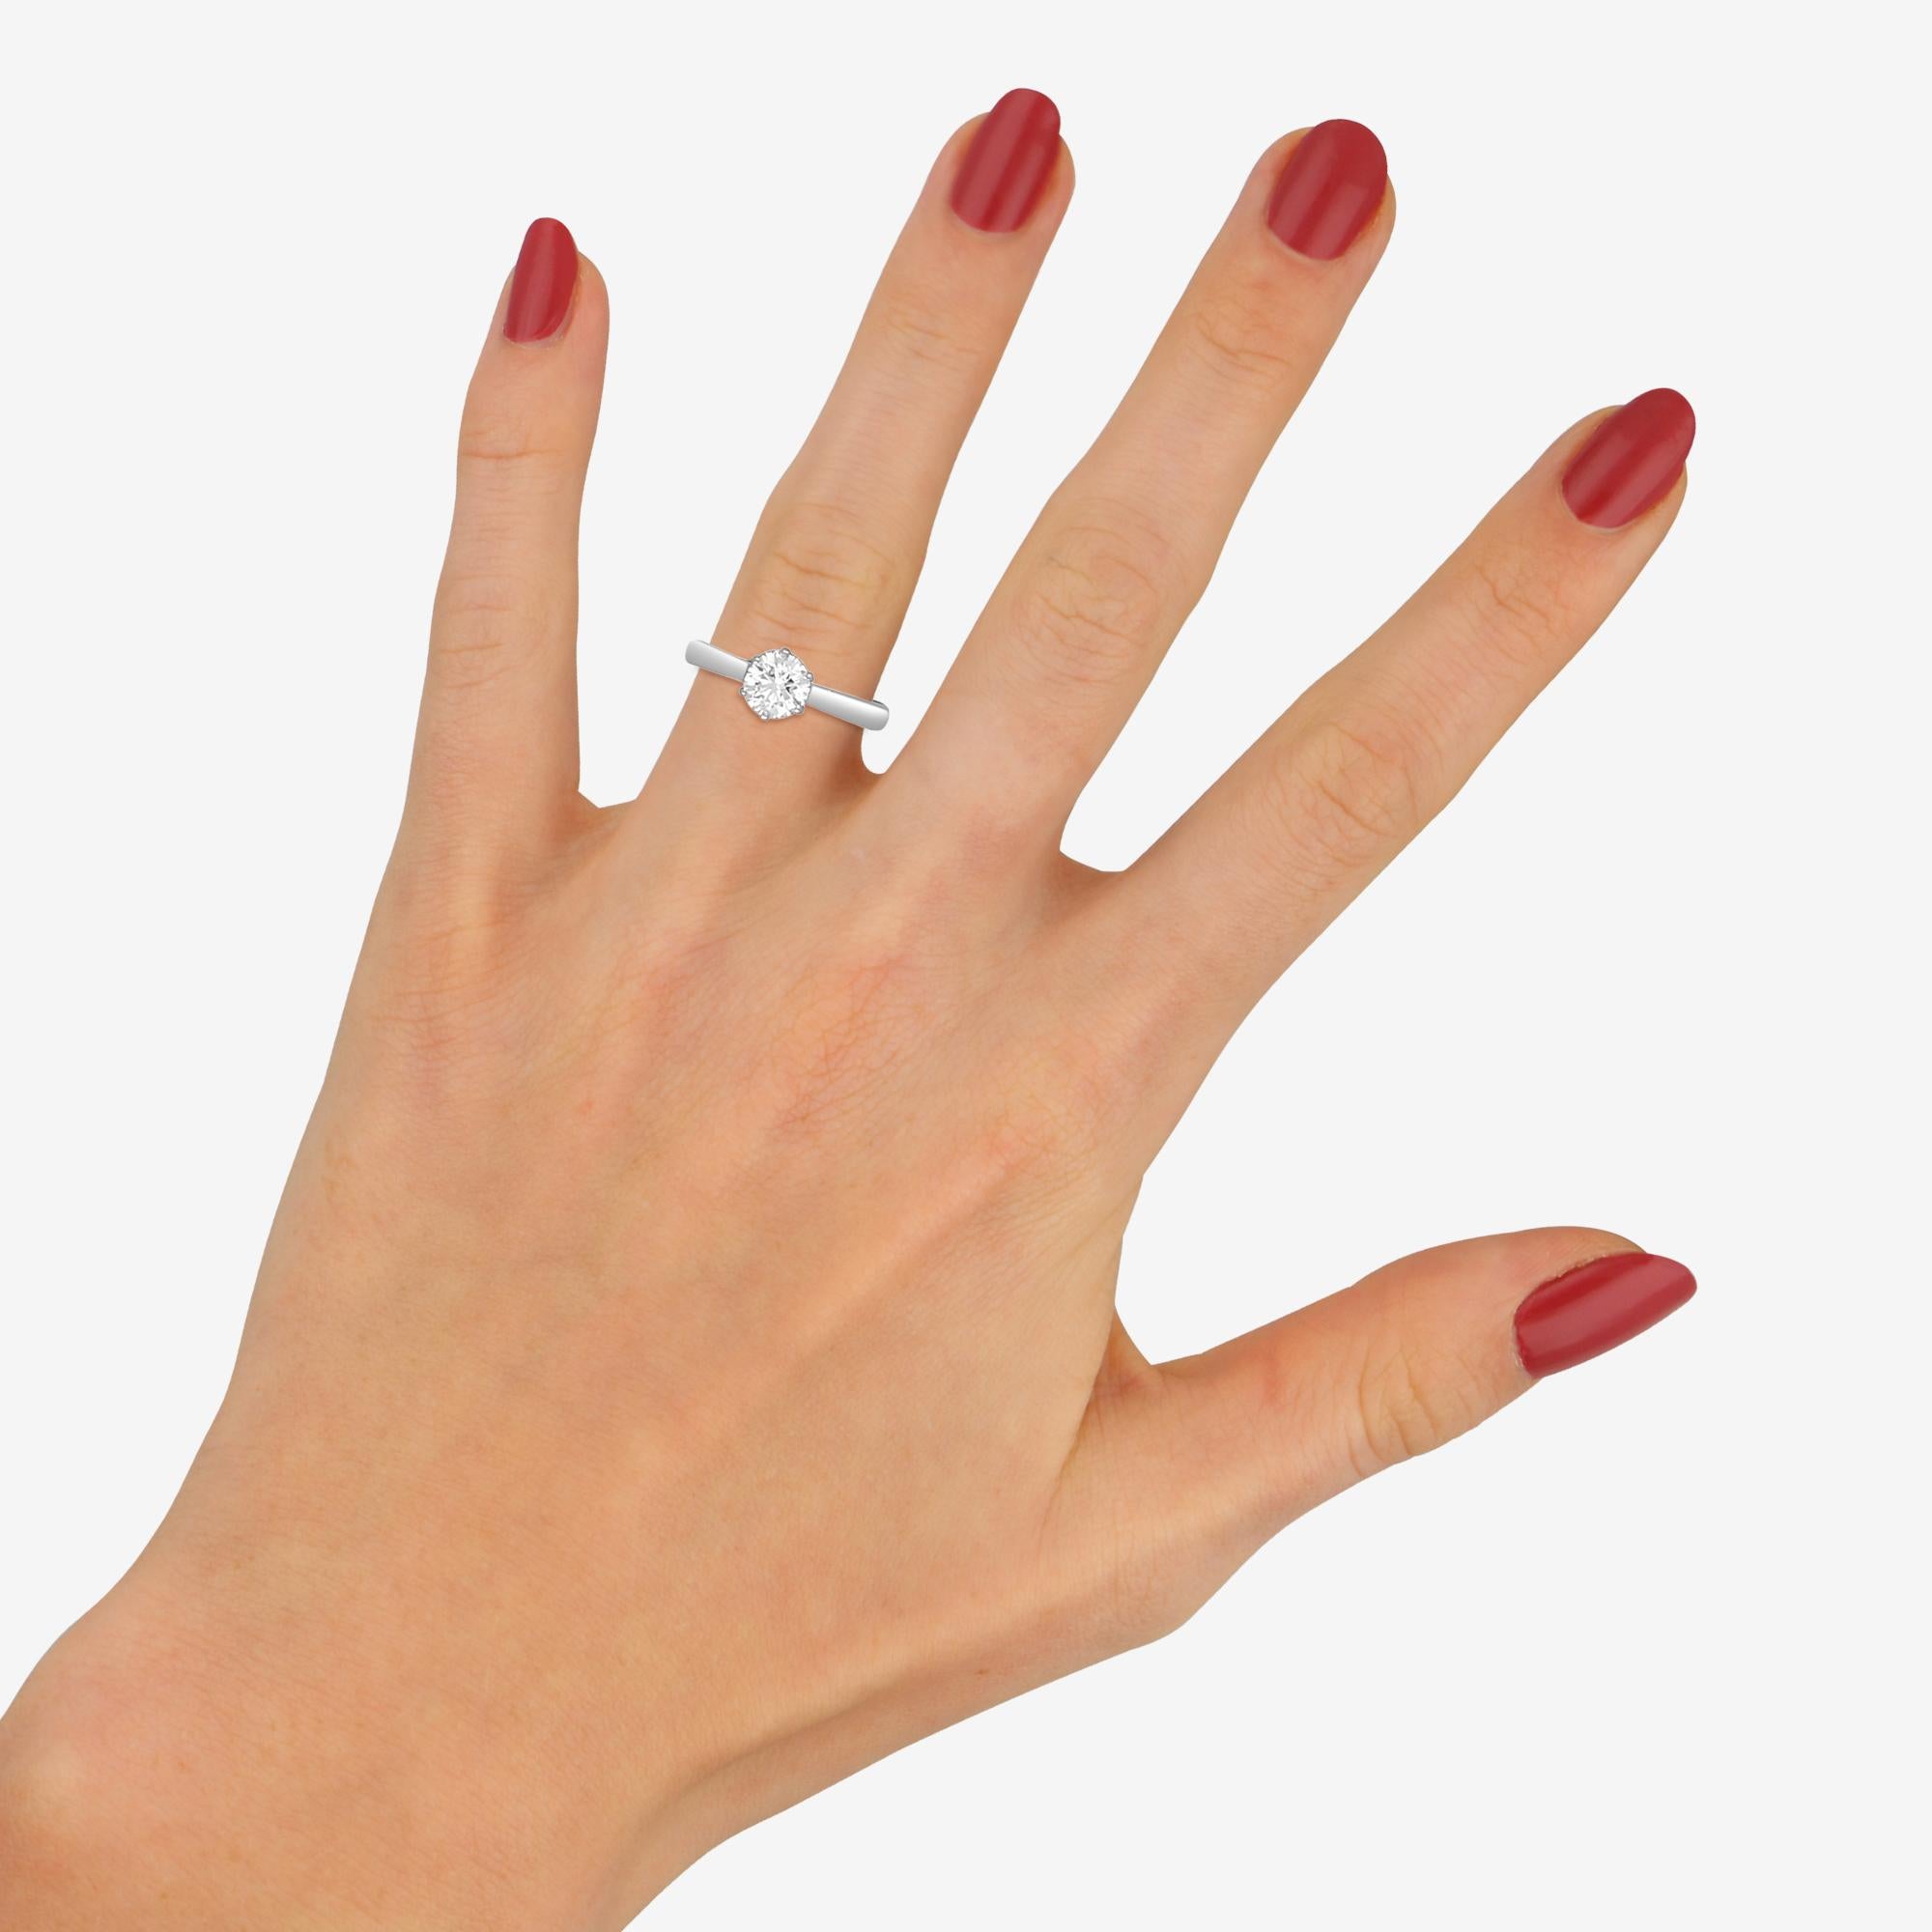 Round Cut Certified Round Brilliant Solitaire Diamond Engagement Ring Set in Platinum